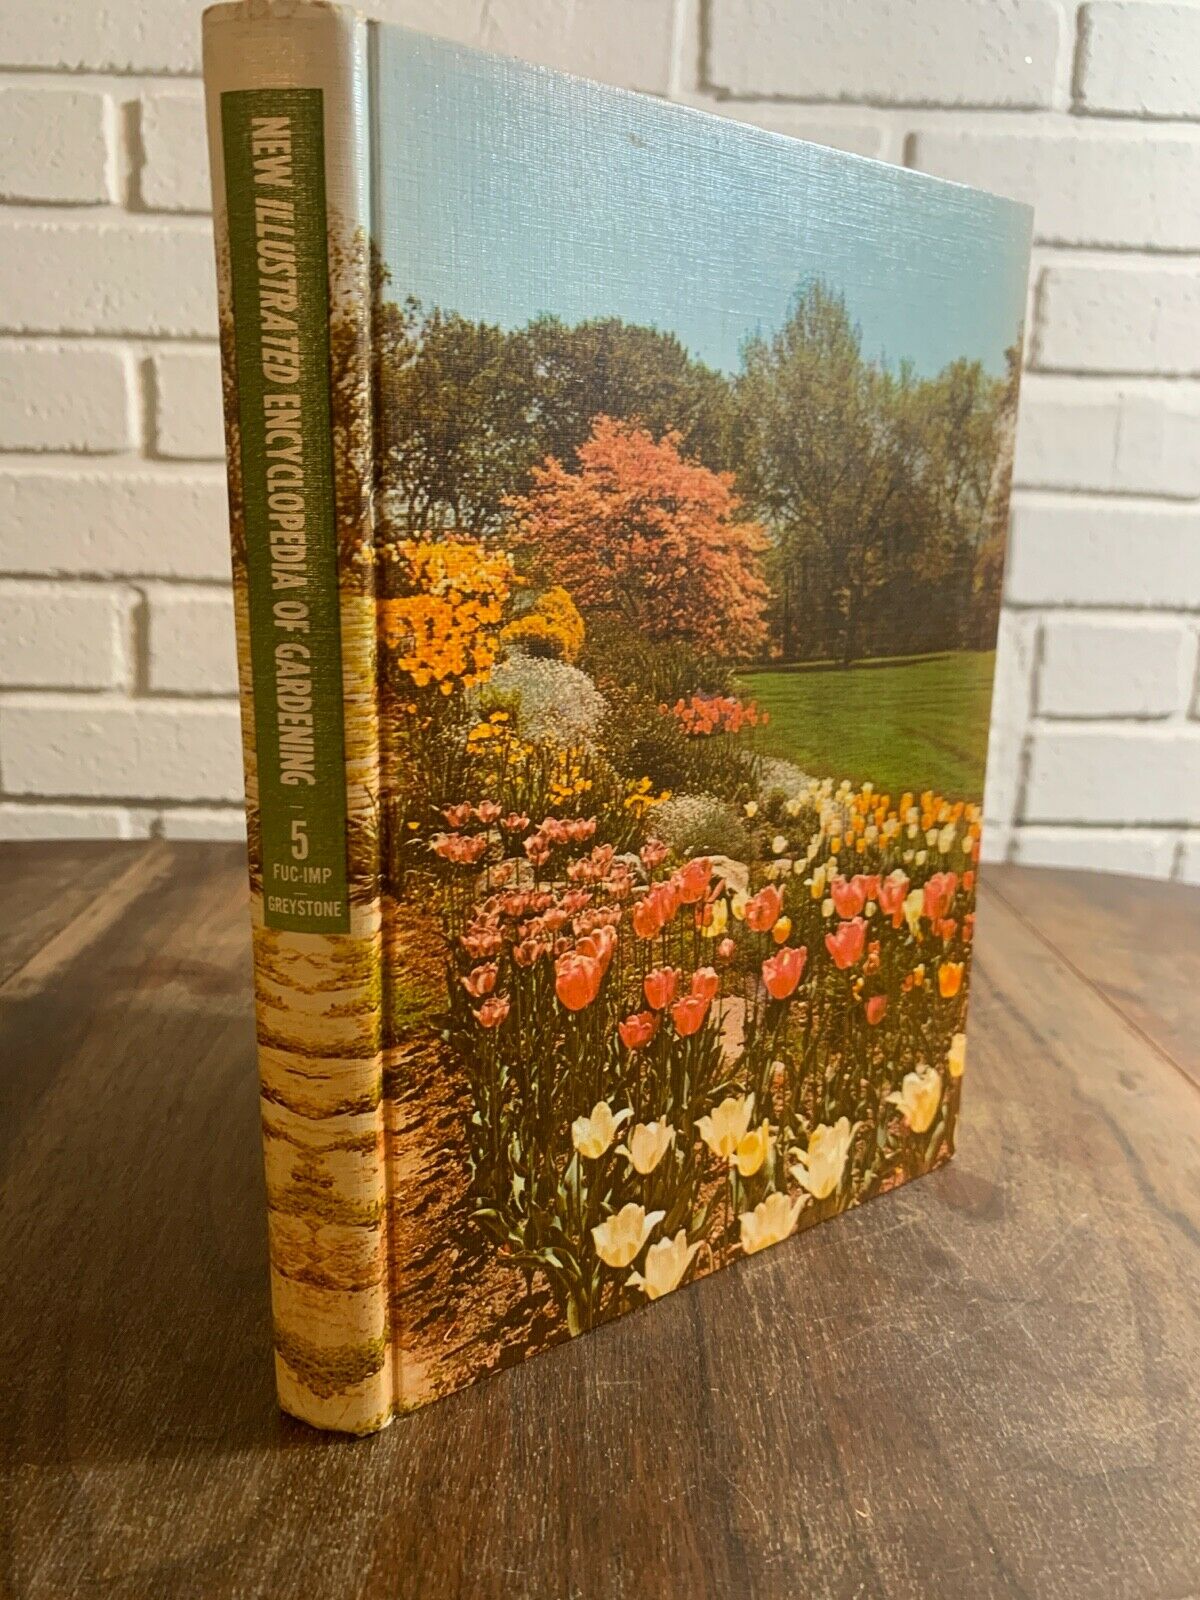 New Illustrated Encyclopedia of Gardening 1960s Hardcover Volume 5 (3B)